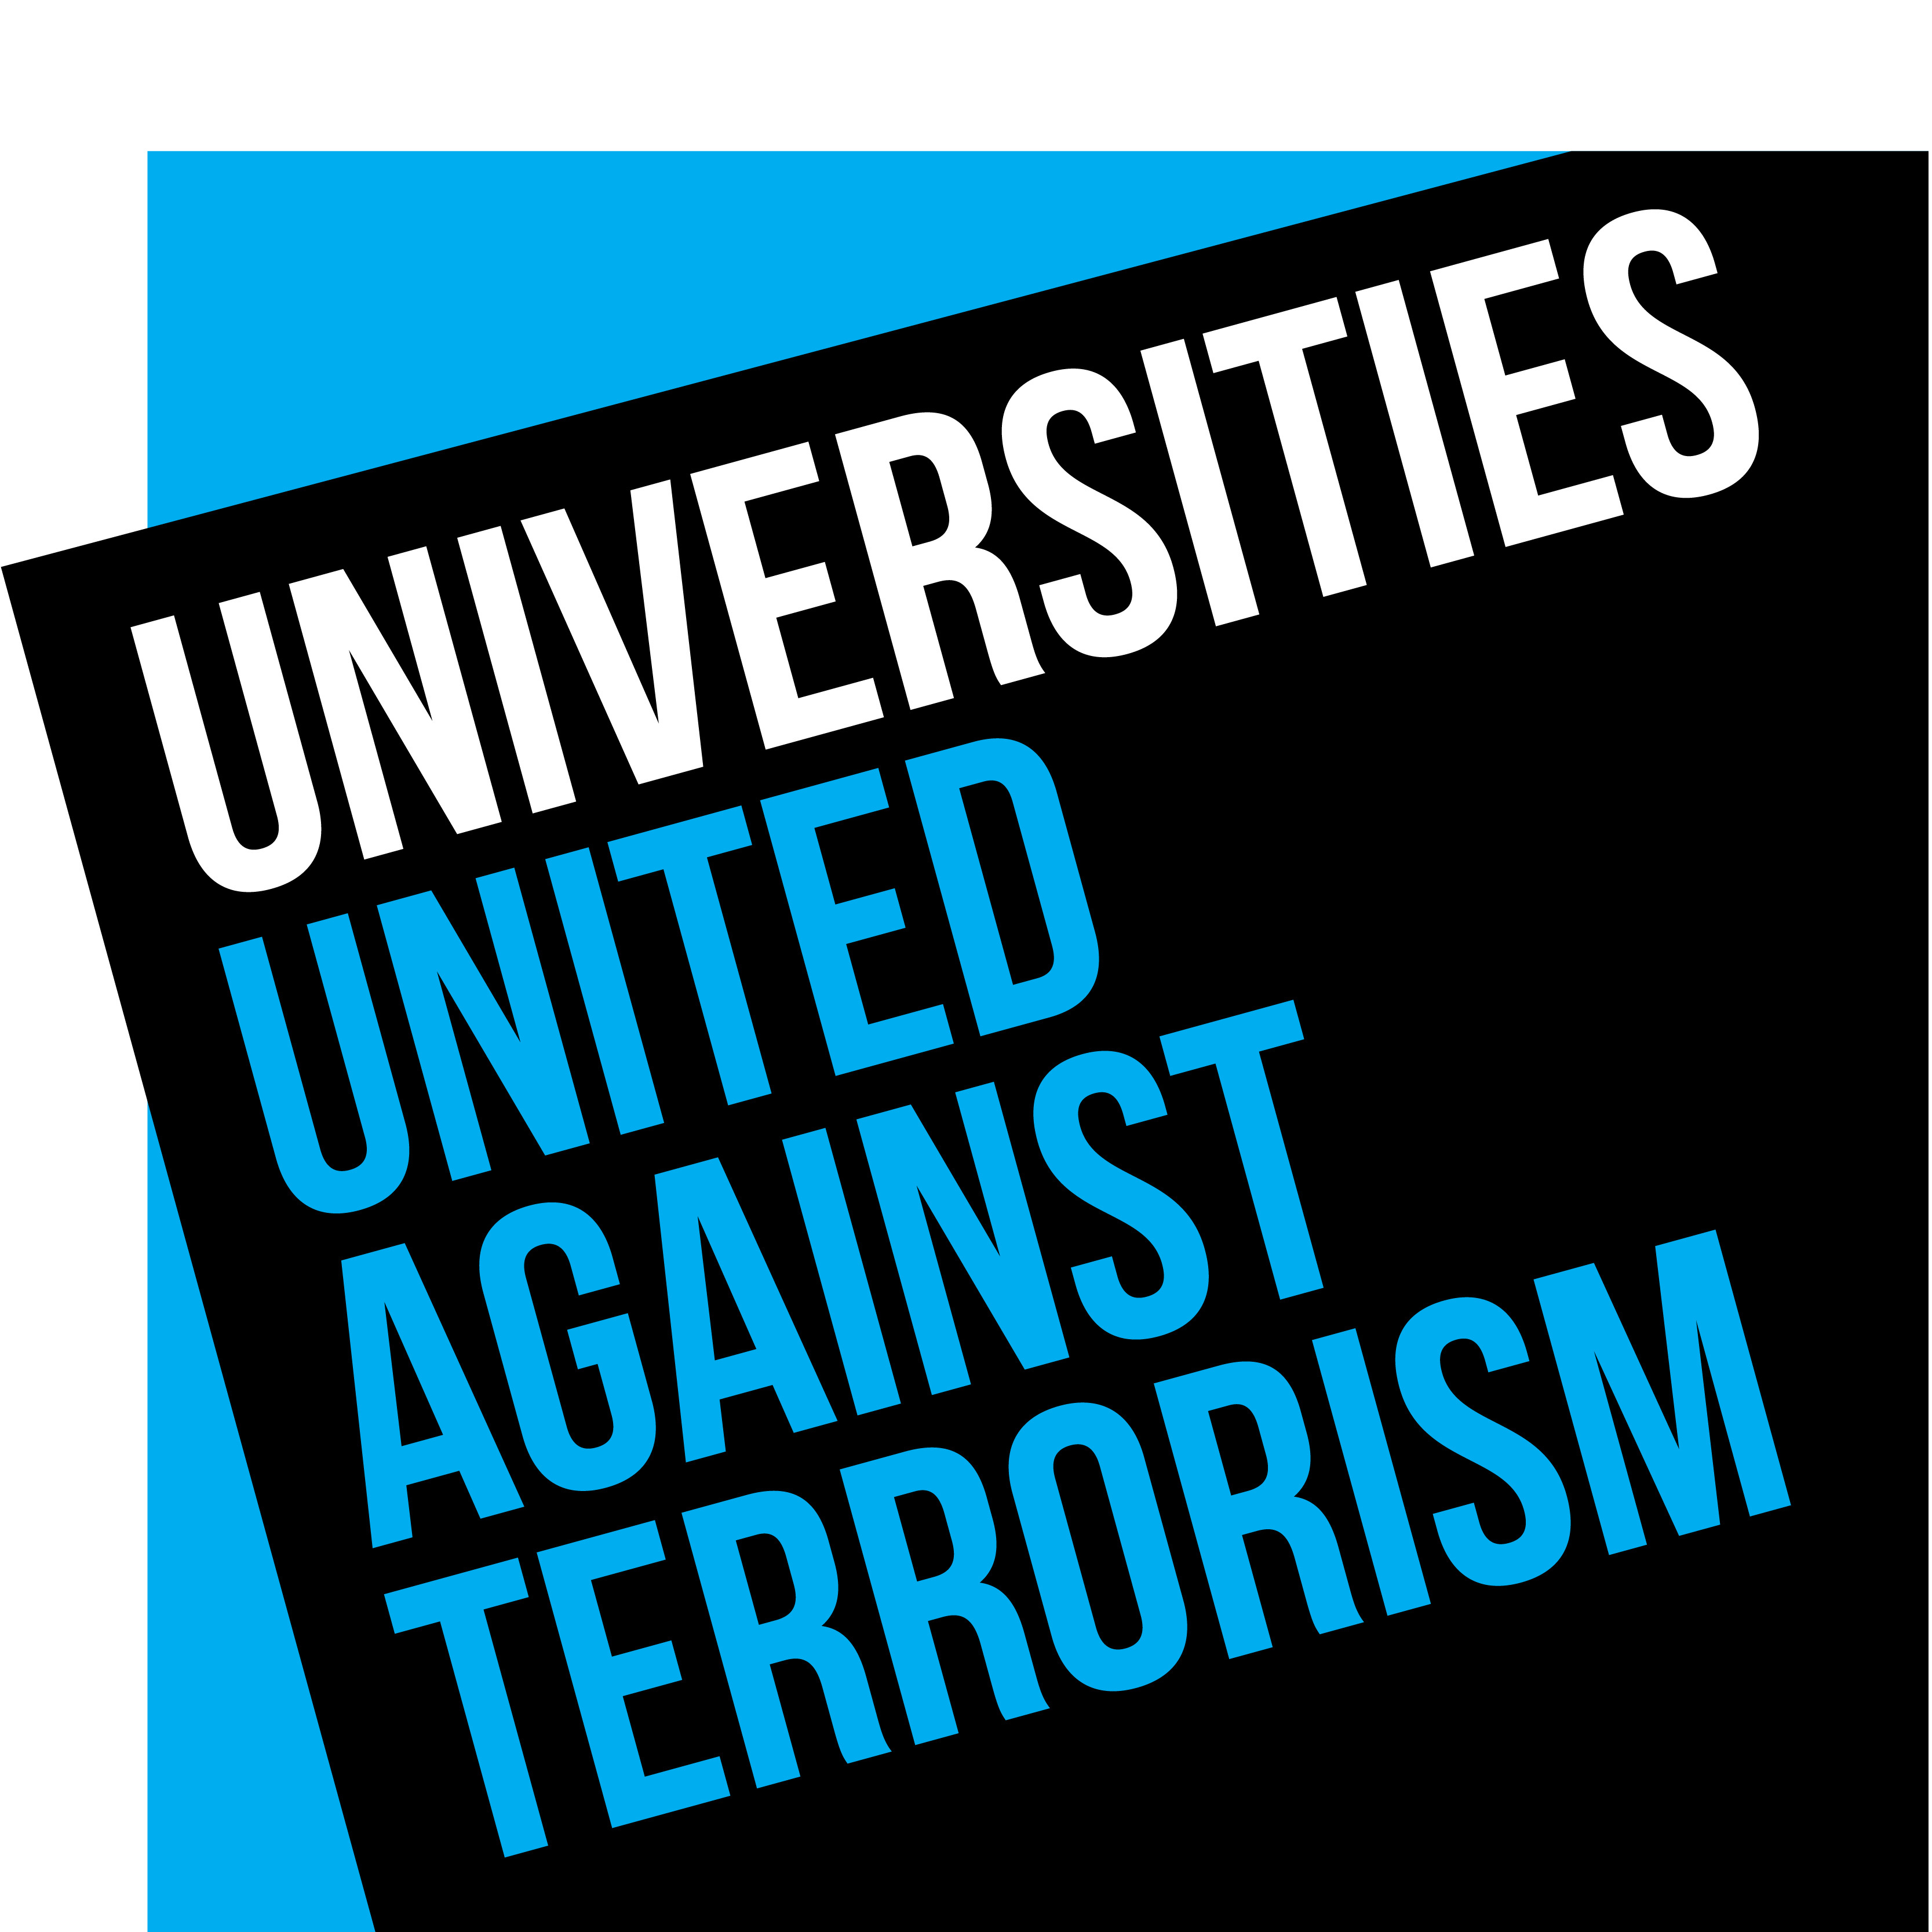 universitiesunitedagainstterrorism.org